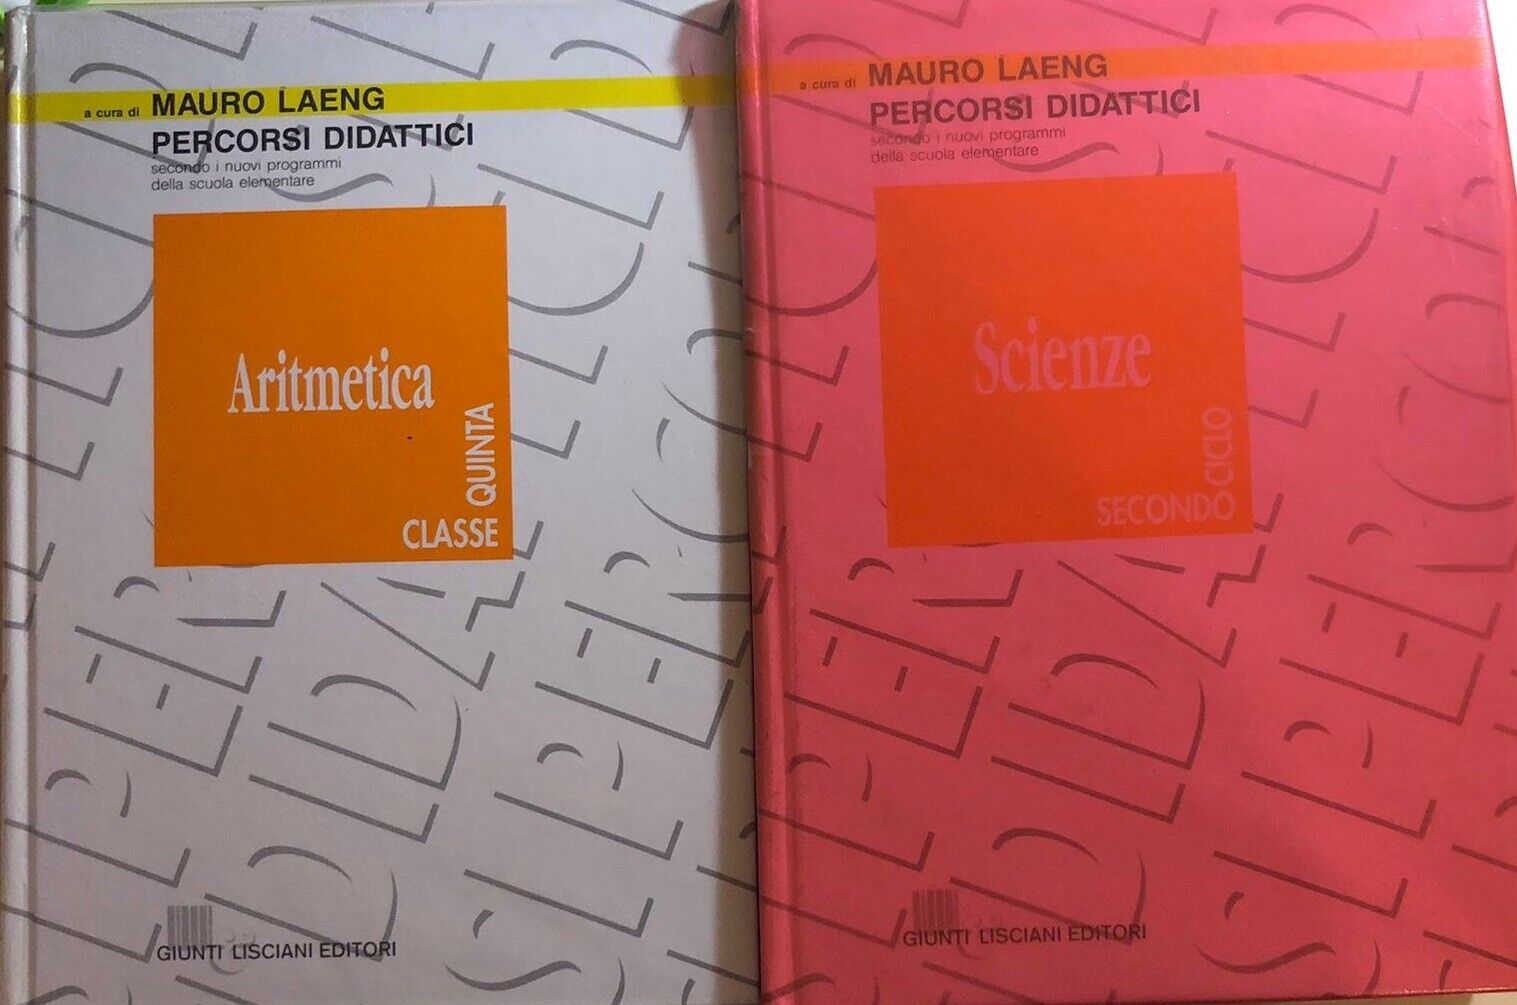 Percorsi didattici, Aritmetica/Scienze di Mauro Laeng, 1990, Giunti Lisciani Edi